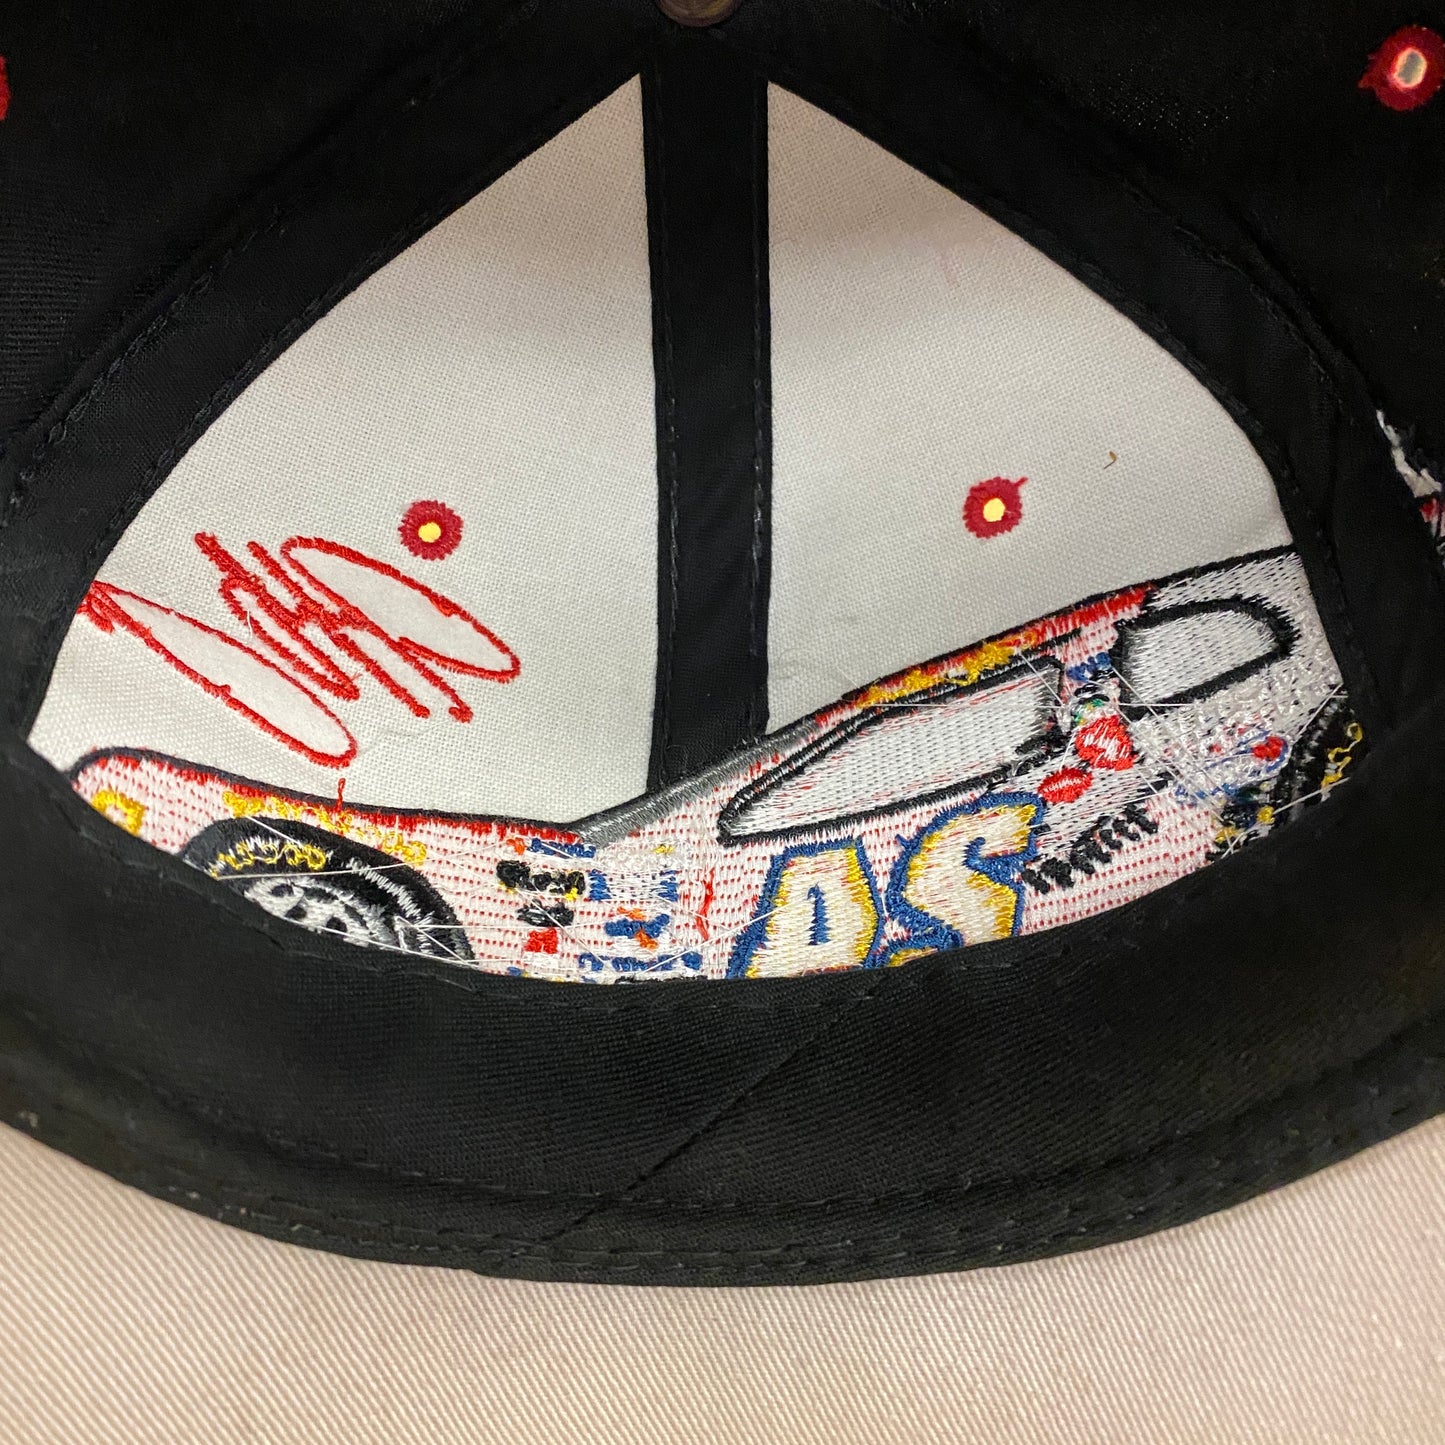 Vintage Jeff Gordon NASCAR x Jurassic Park Snapback Hat